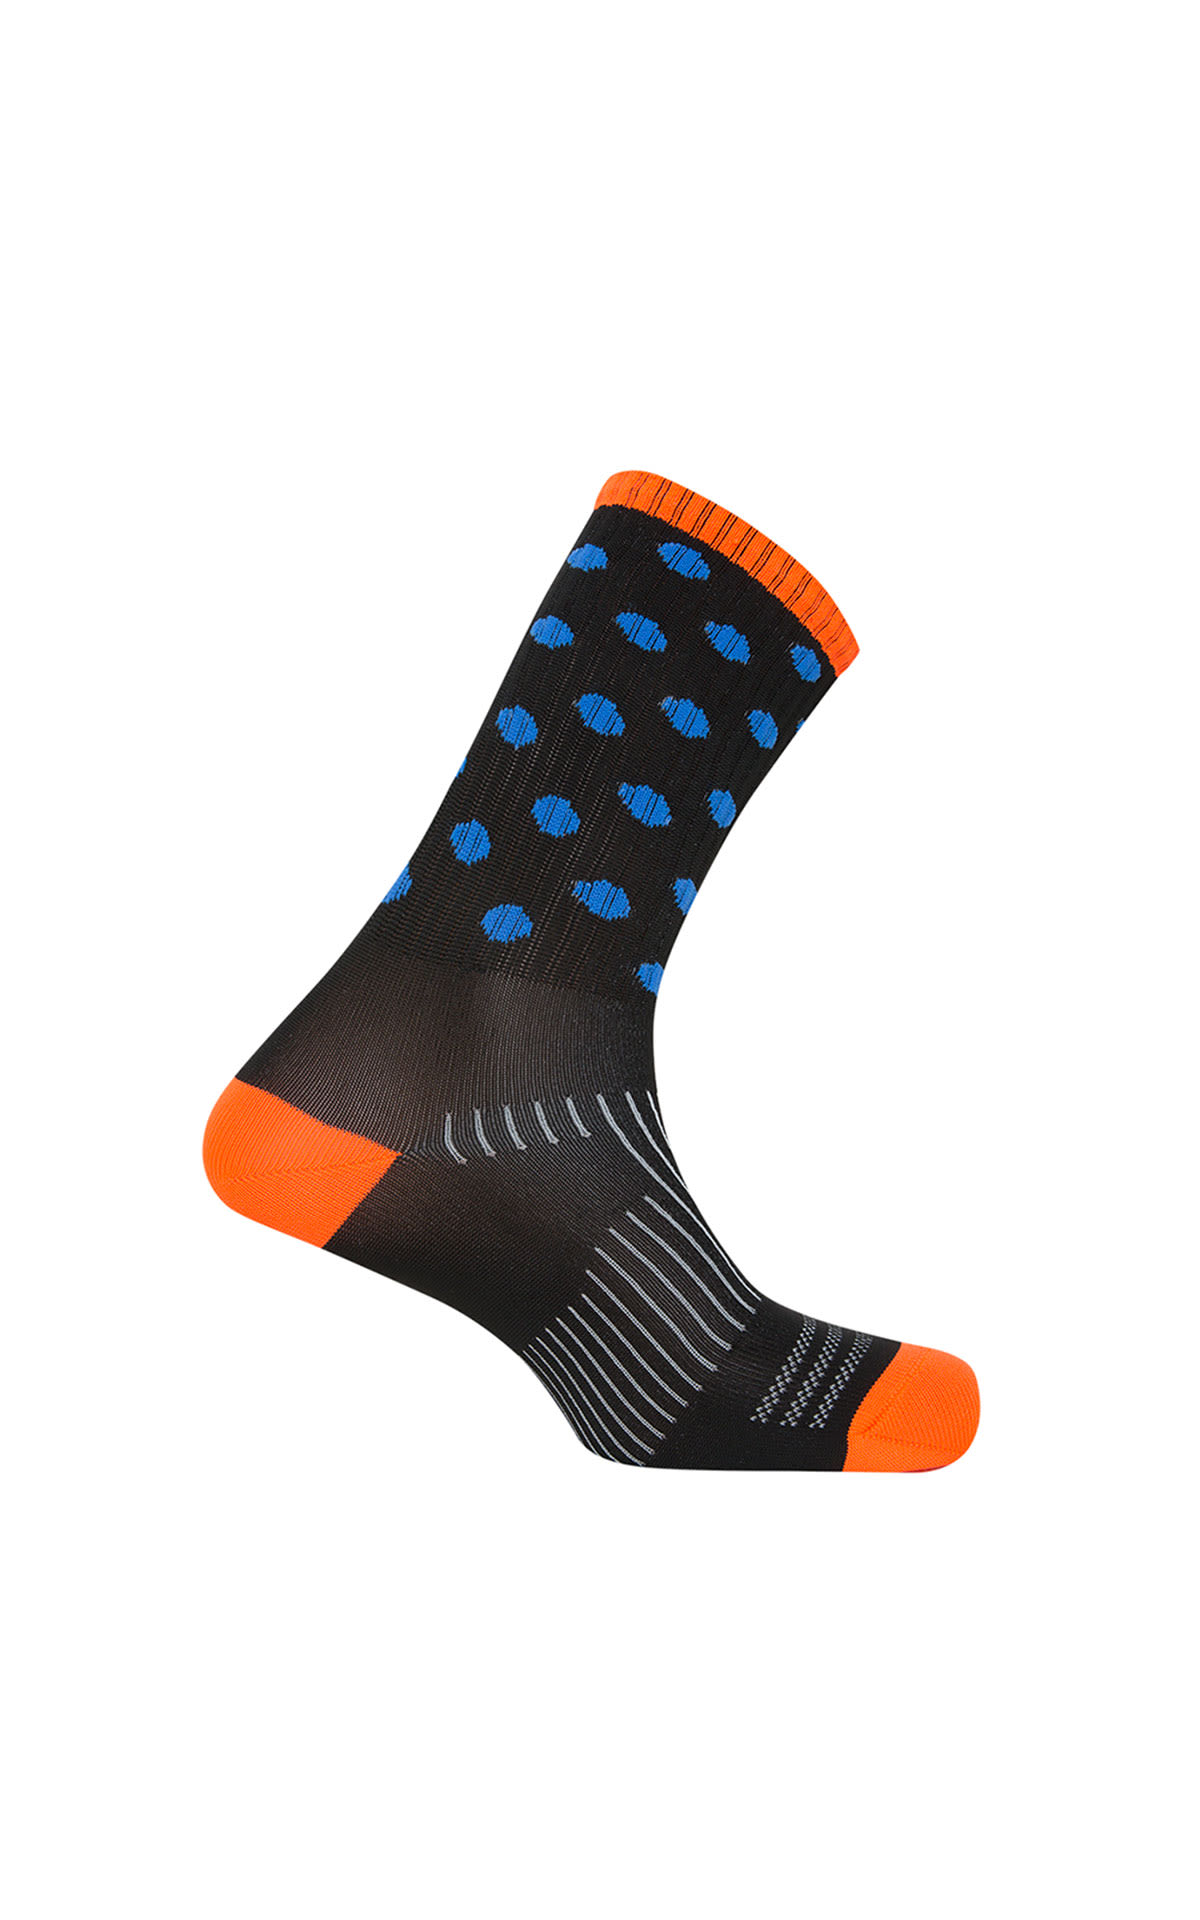 Black sock with orange sports details Punto Blanco